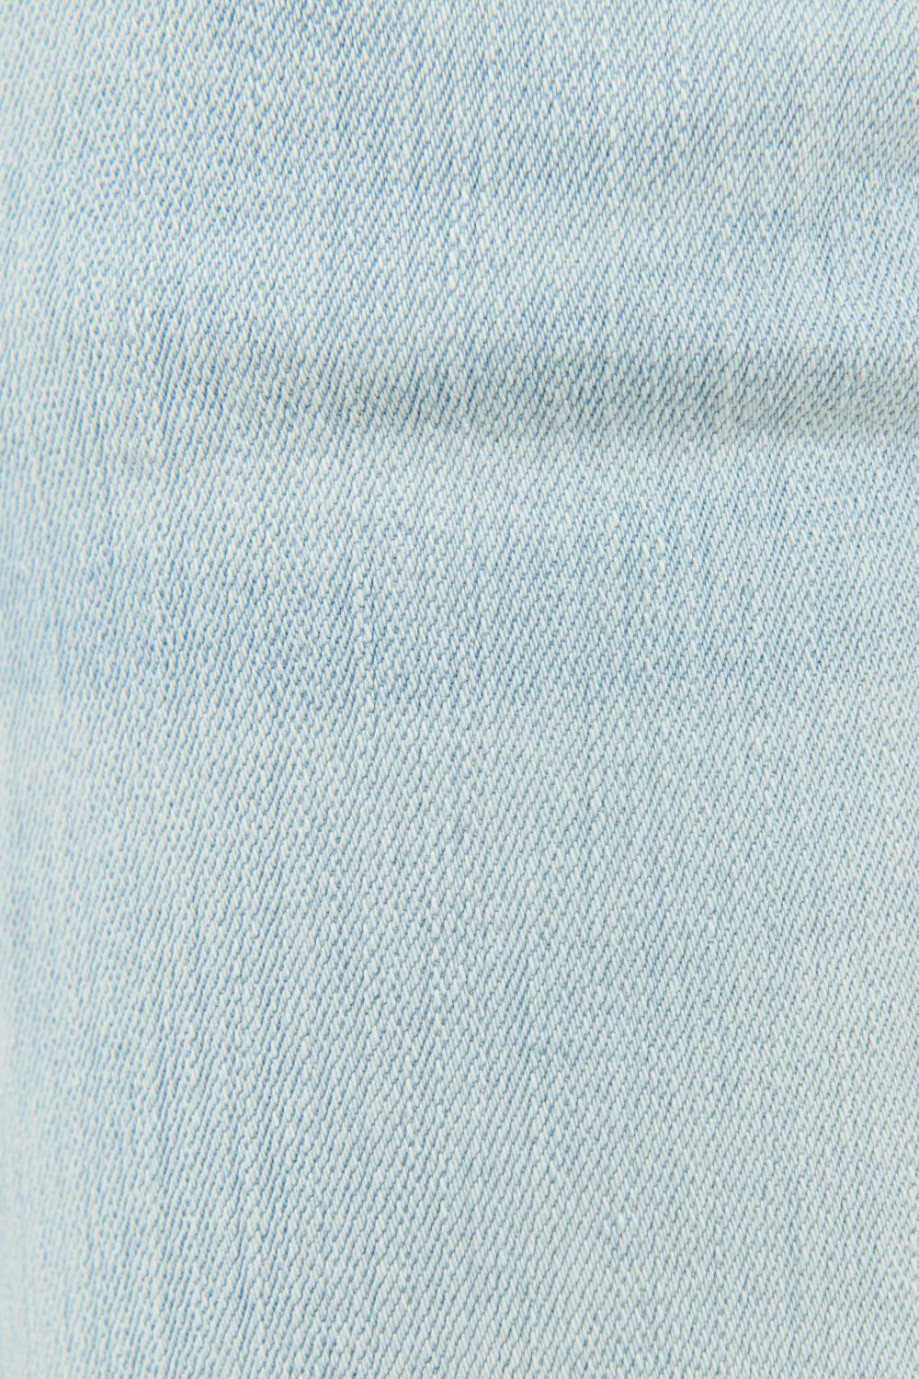 Jean azul claro súper skinny con tiro bajo, bolsillos y ajuste ceñido